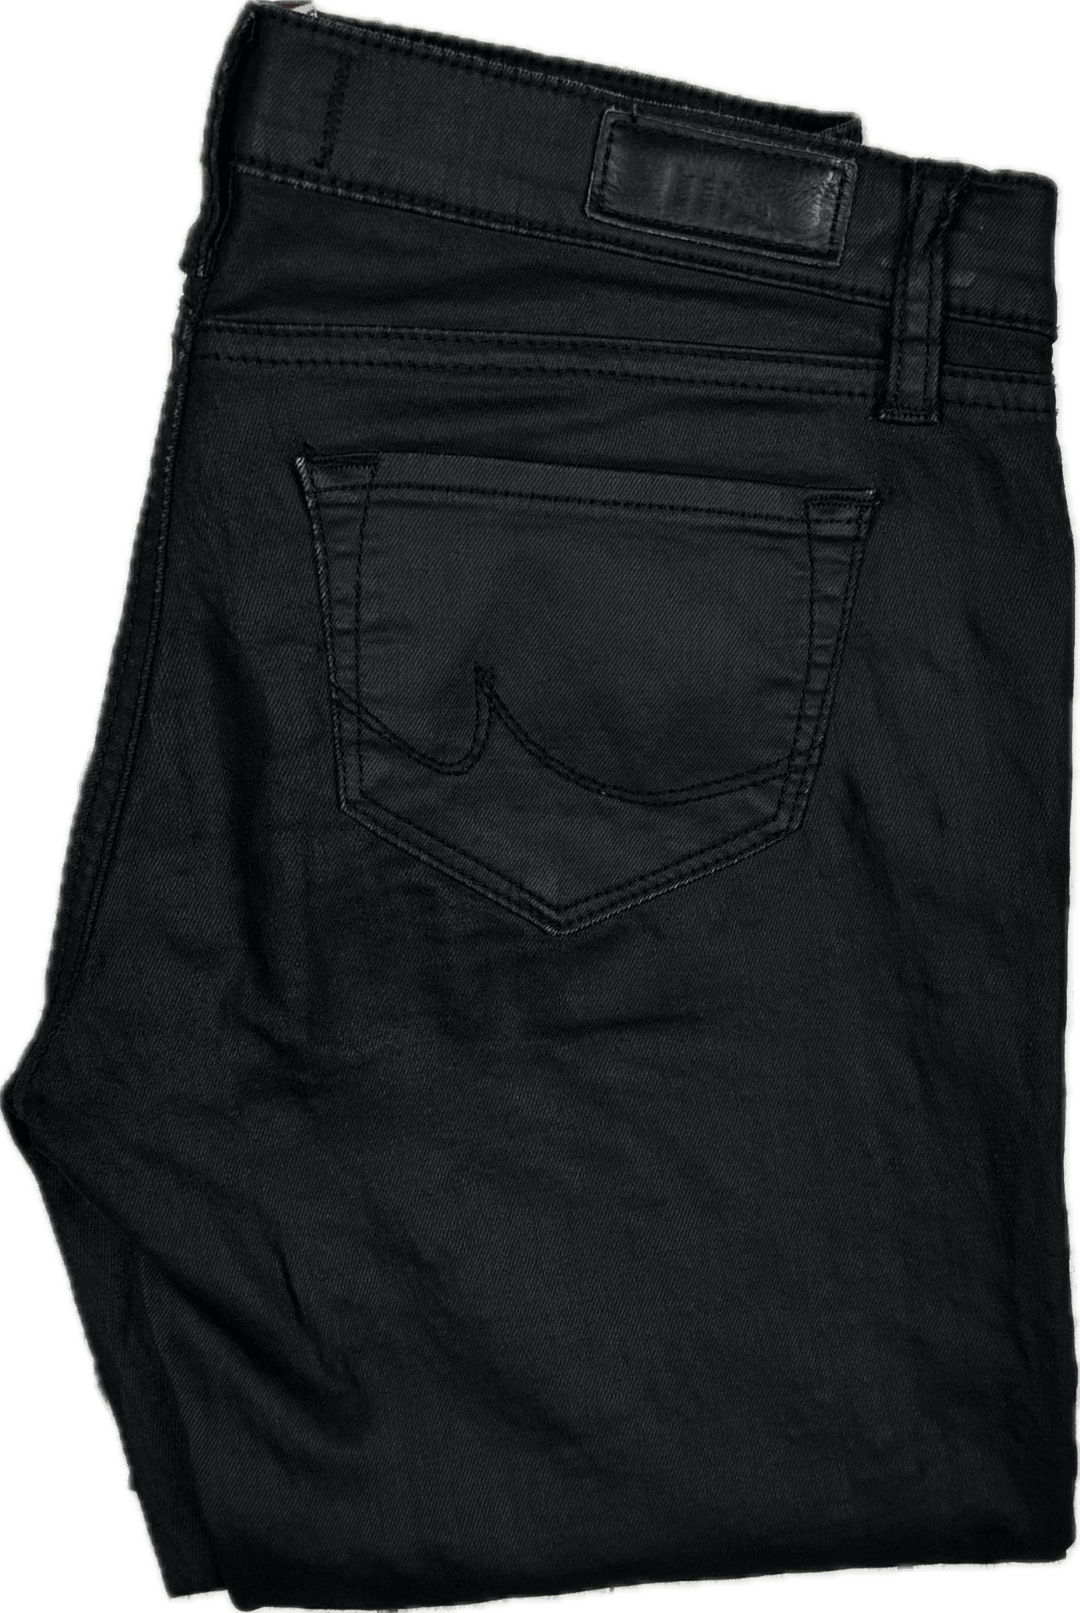 LTB Ladies Low Rise Coated Black Skinny Jeans -Size 26 - Jean Pool